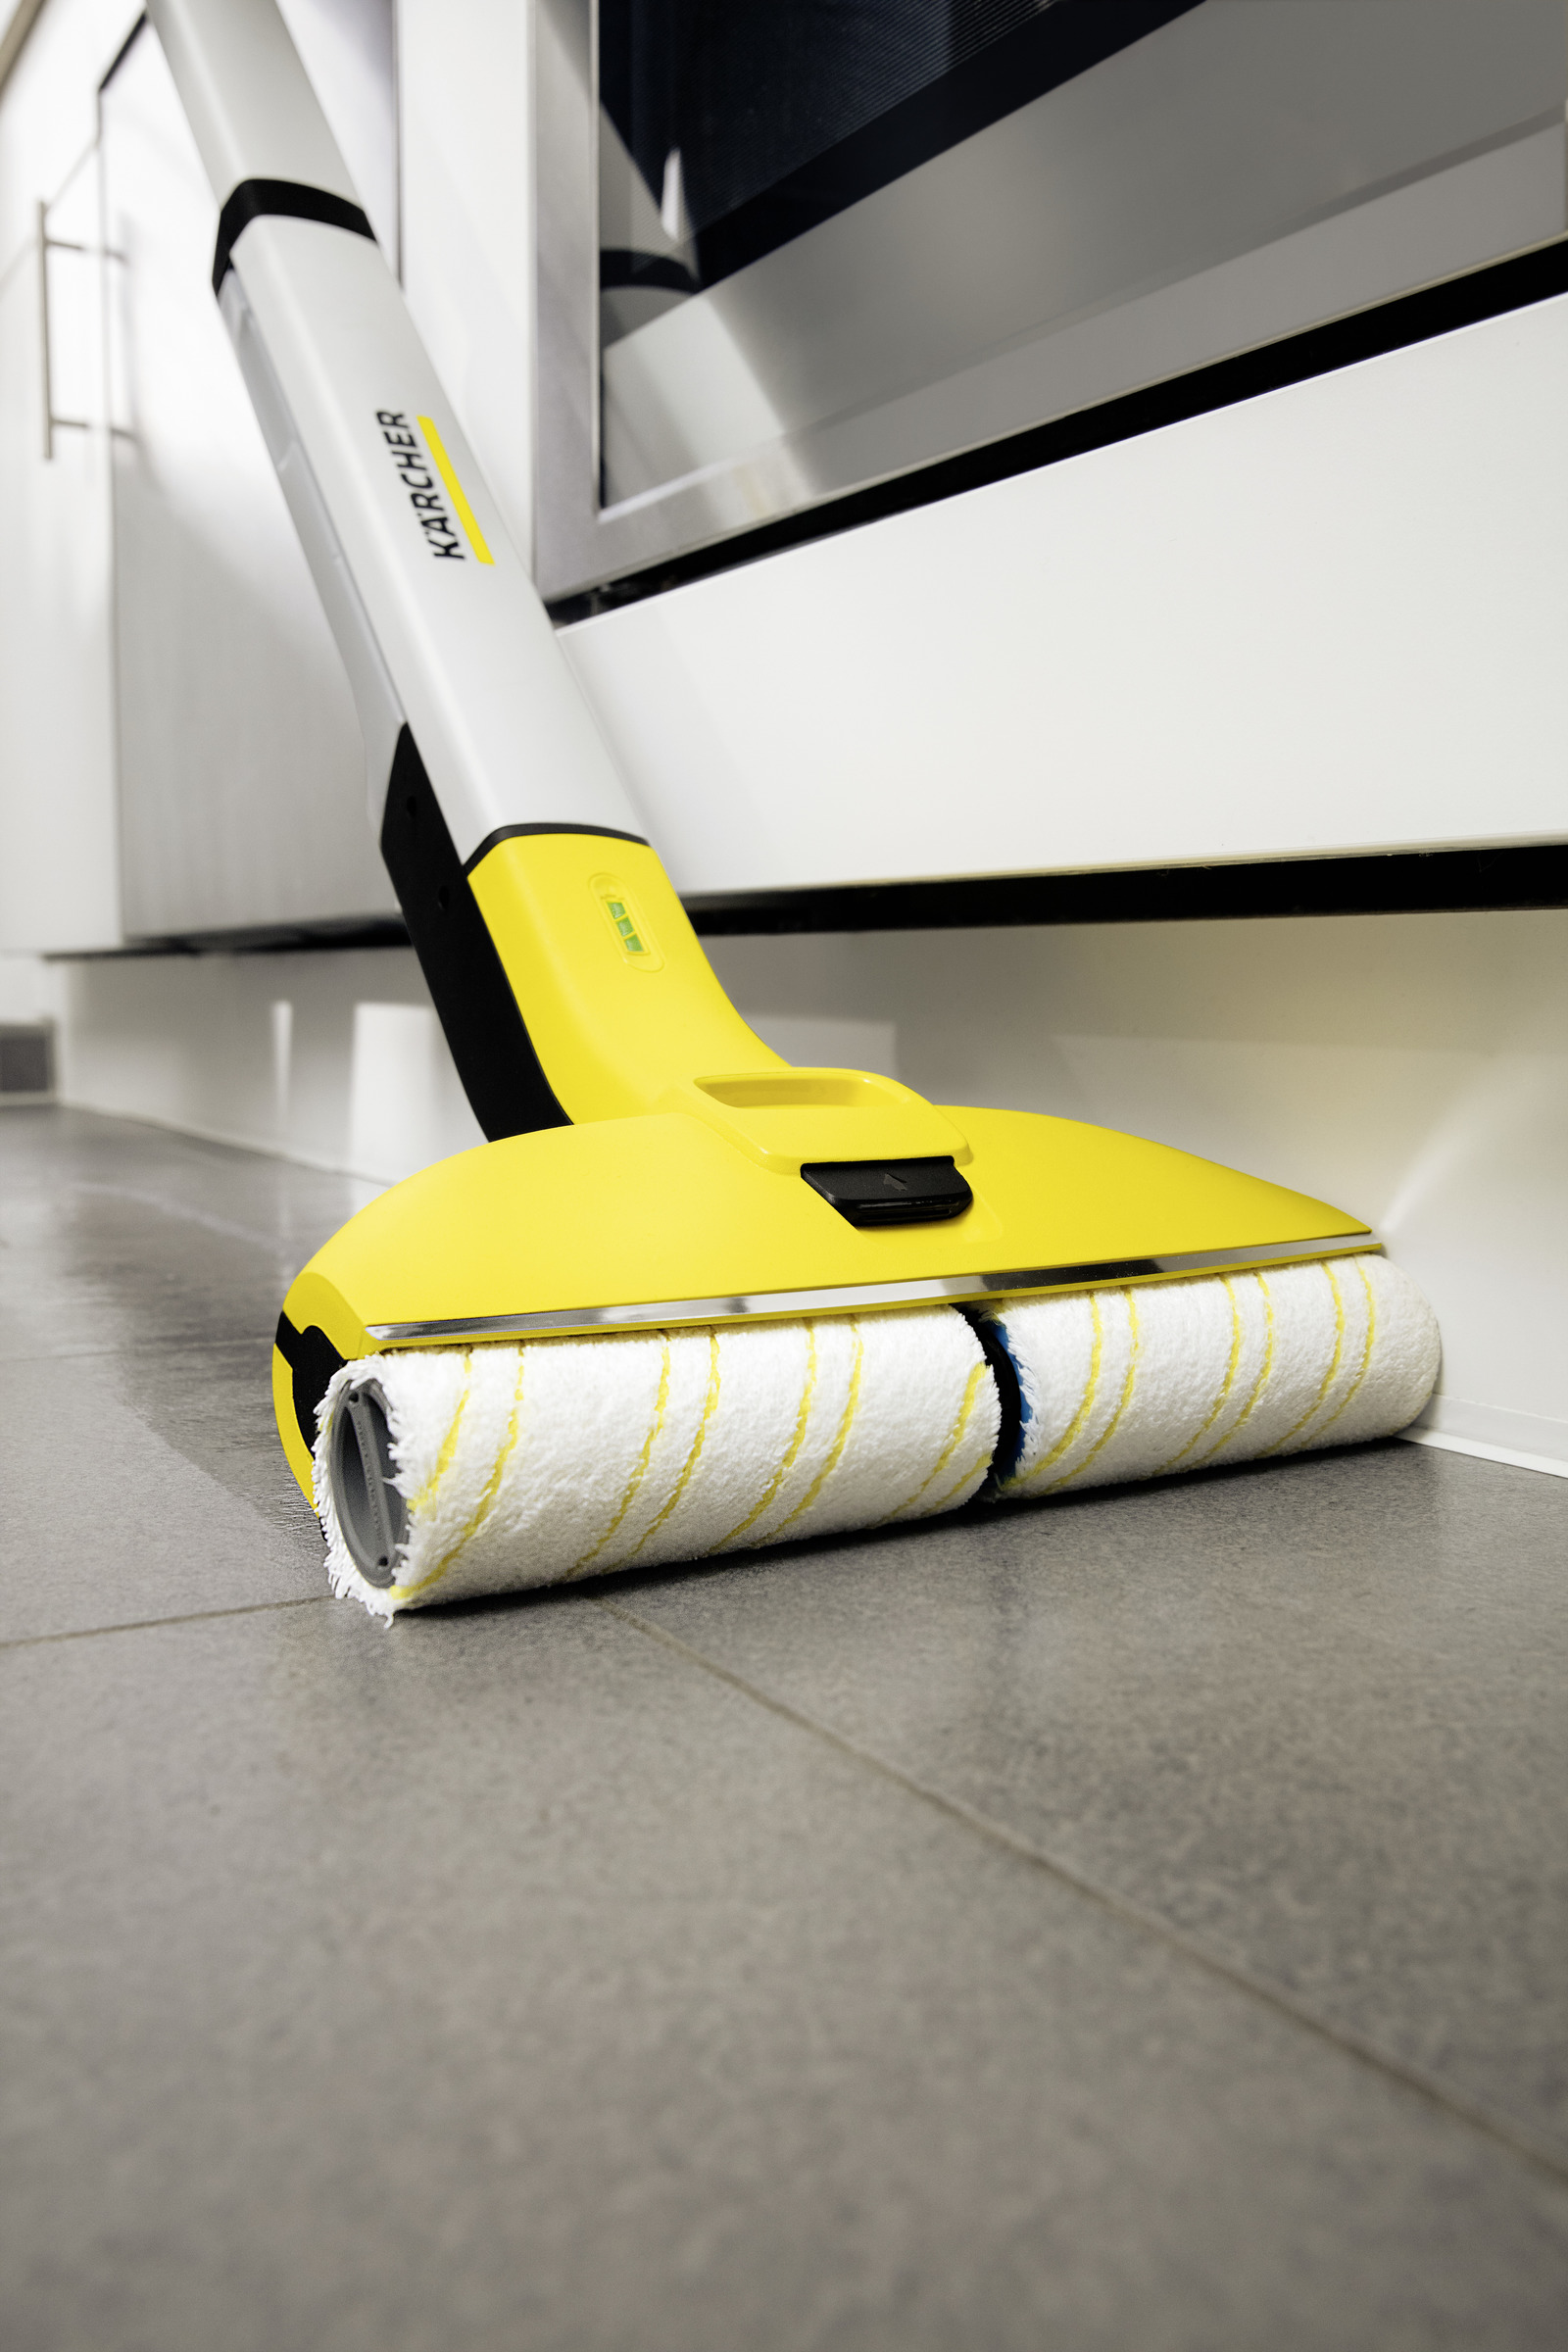 Kärcher FC 7 cordless power mop for a super effortless clean